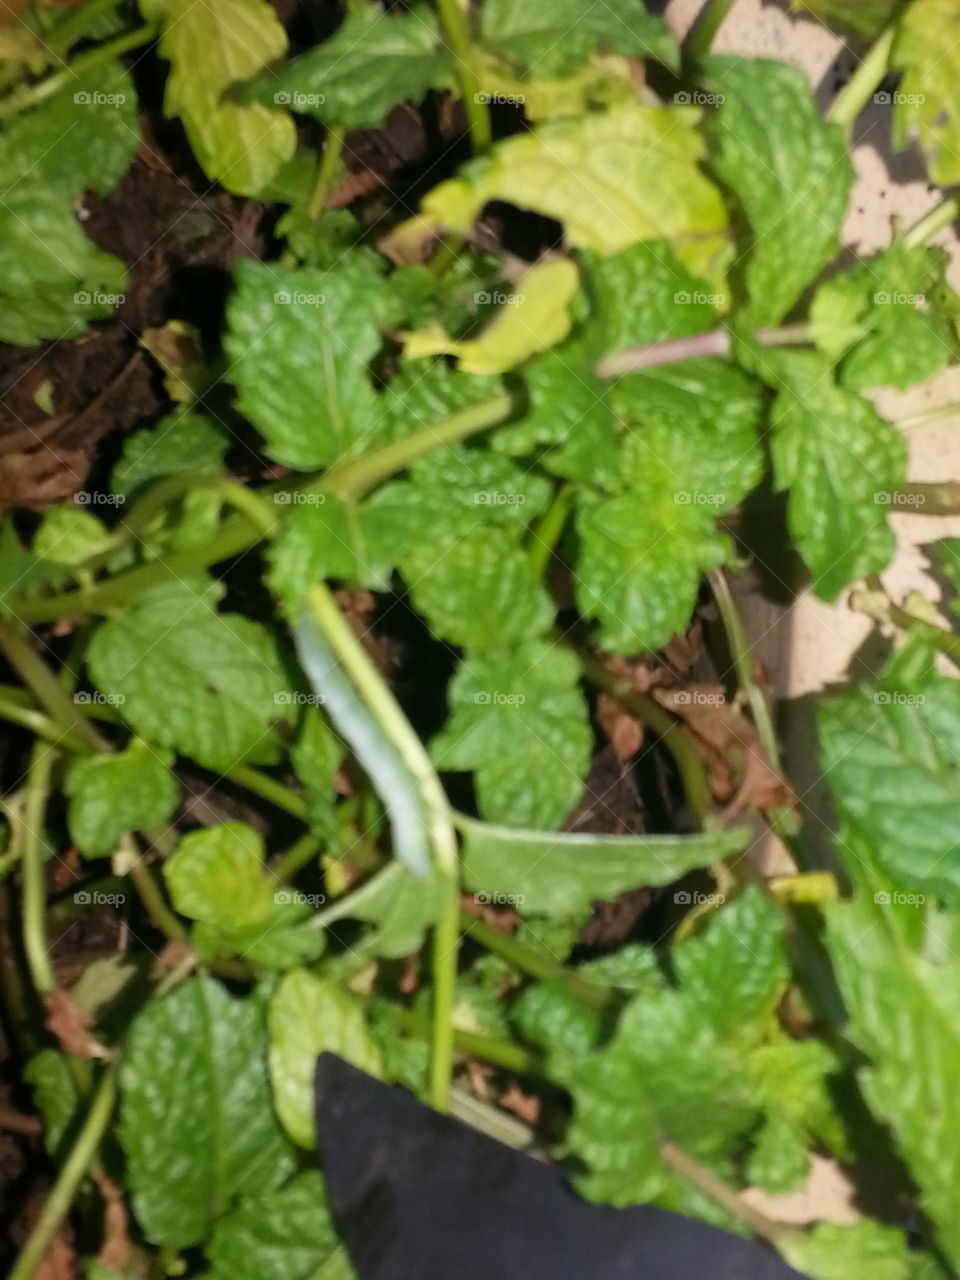 caterpillar on my mint plant